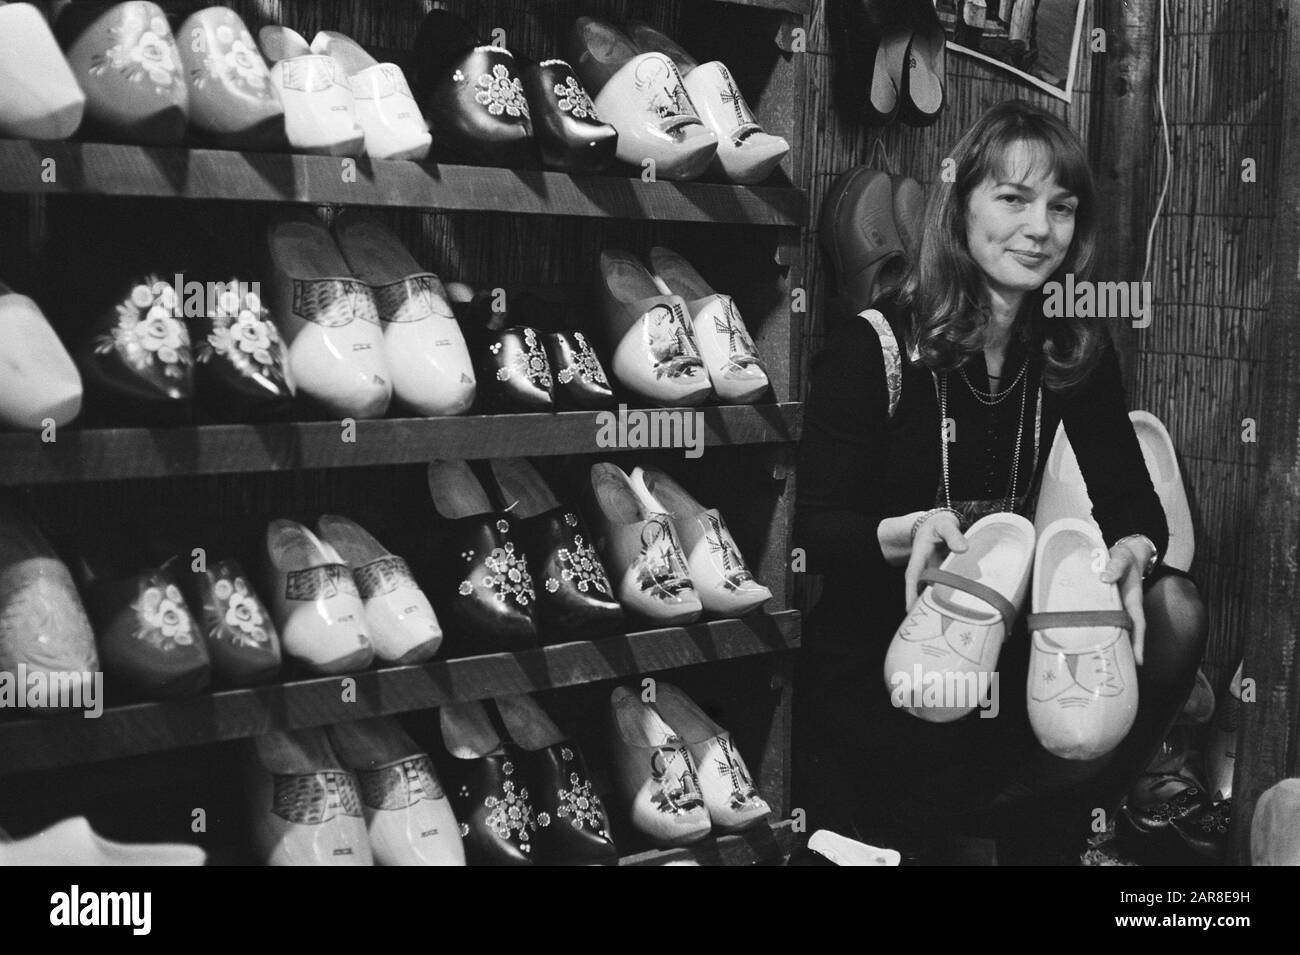 Souvenirsbeurs in Jaarbeurs; girl at rack clogs Date: January 10, 1977 Keywords: CLOMs, girls Personname: Girl Stock Photo